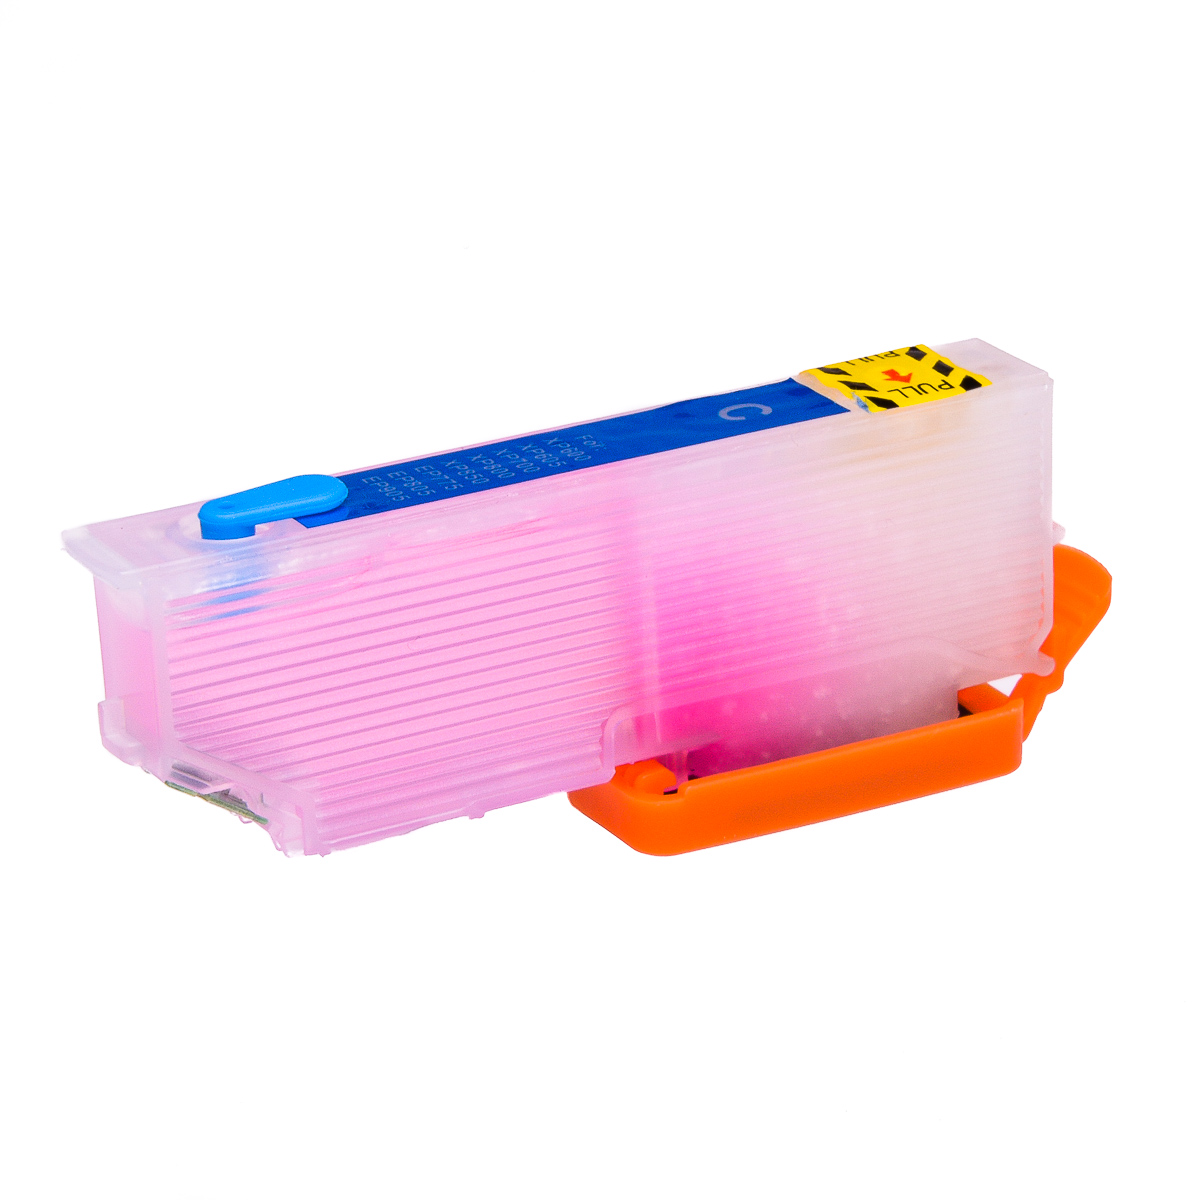 Cyan printhead cleaning cartridge for Epson XP-8500 printer